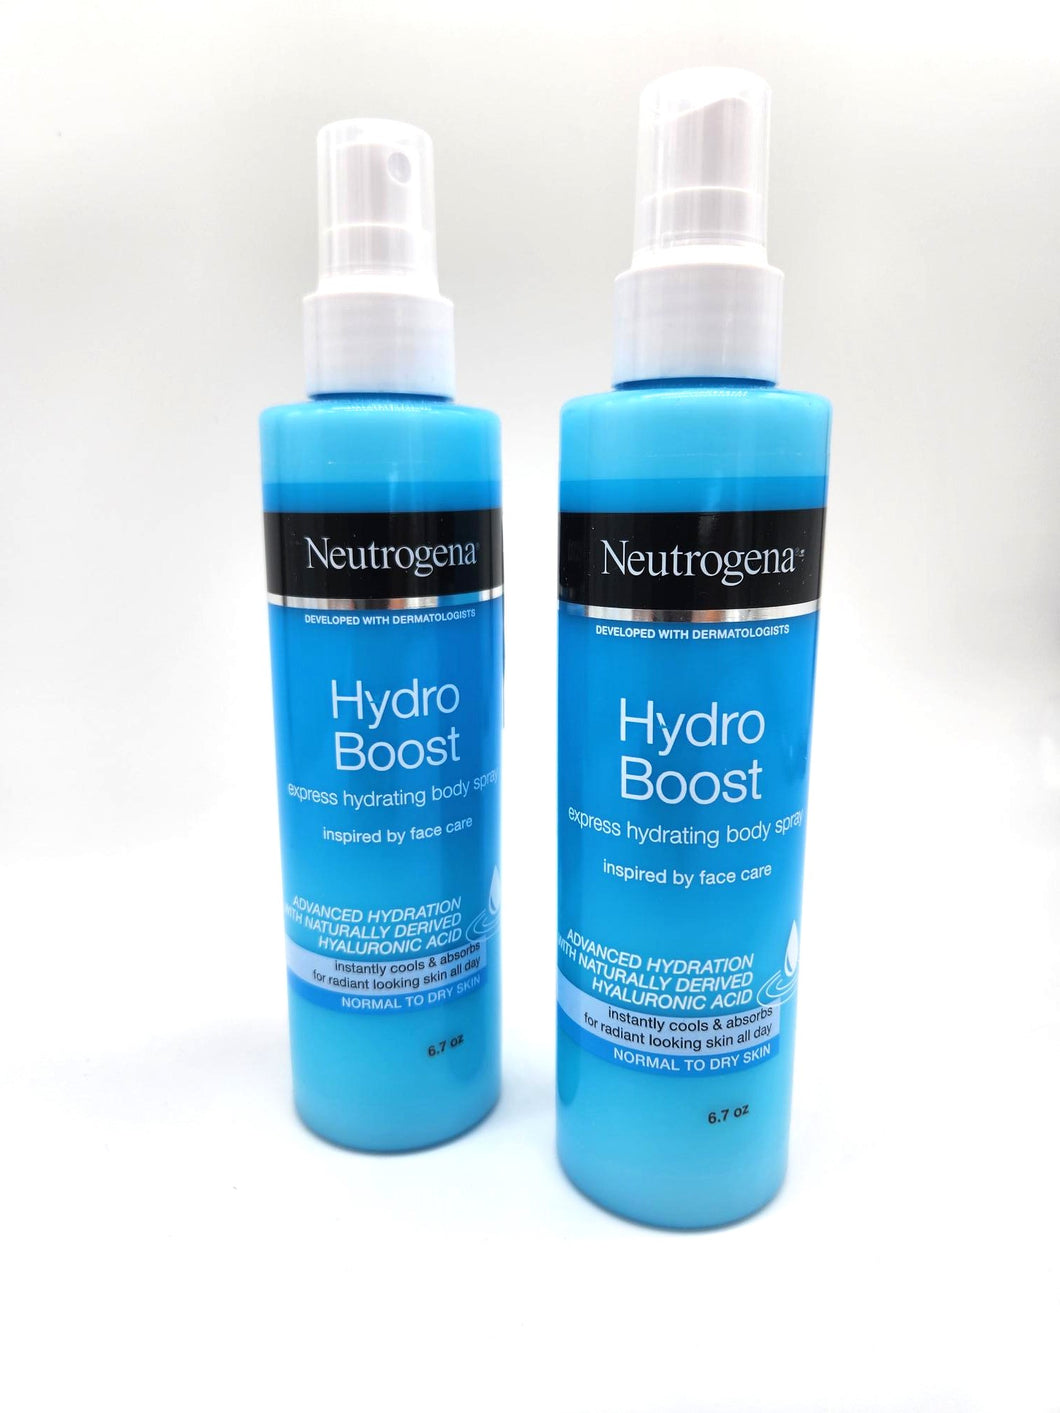 Neutrogena HydroBoost Body Spray with Hyaluronic Acid - 2 bottles.